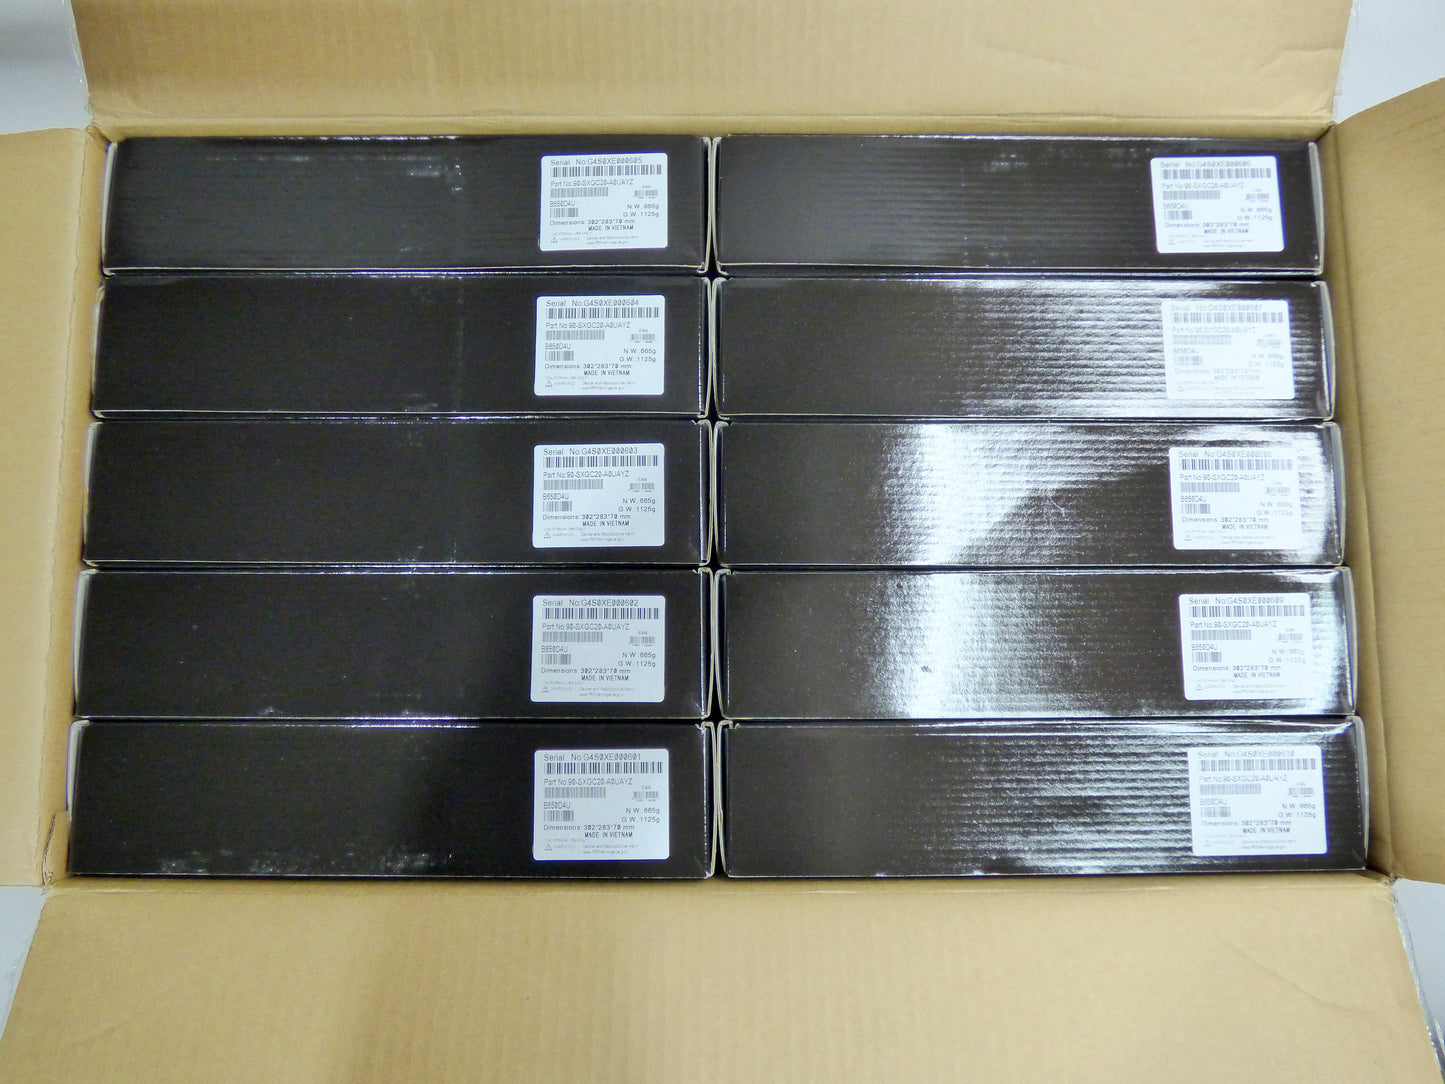 10x NEW ASRock Rack B650D4U AMD AM5 Server Motherboards IPMI Master Retail LOT